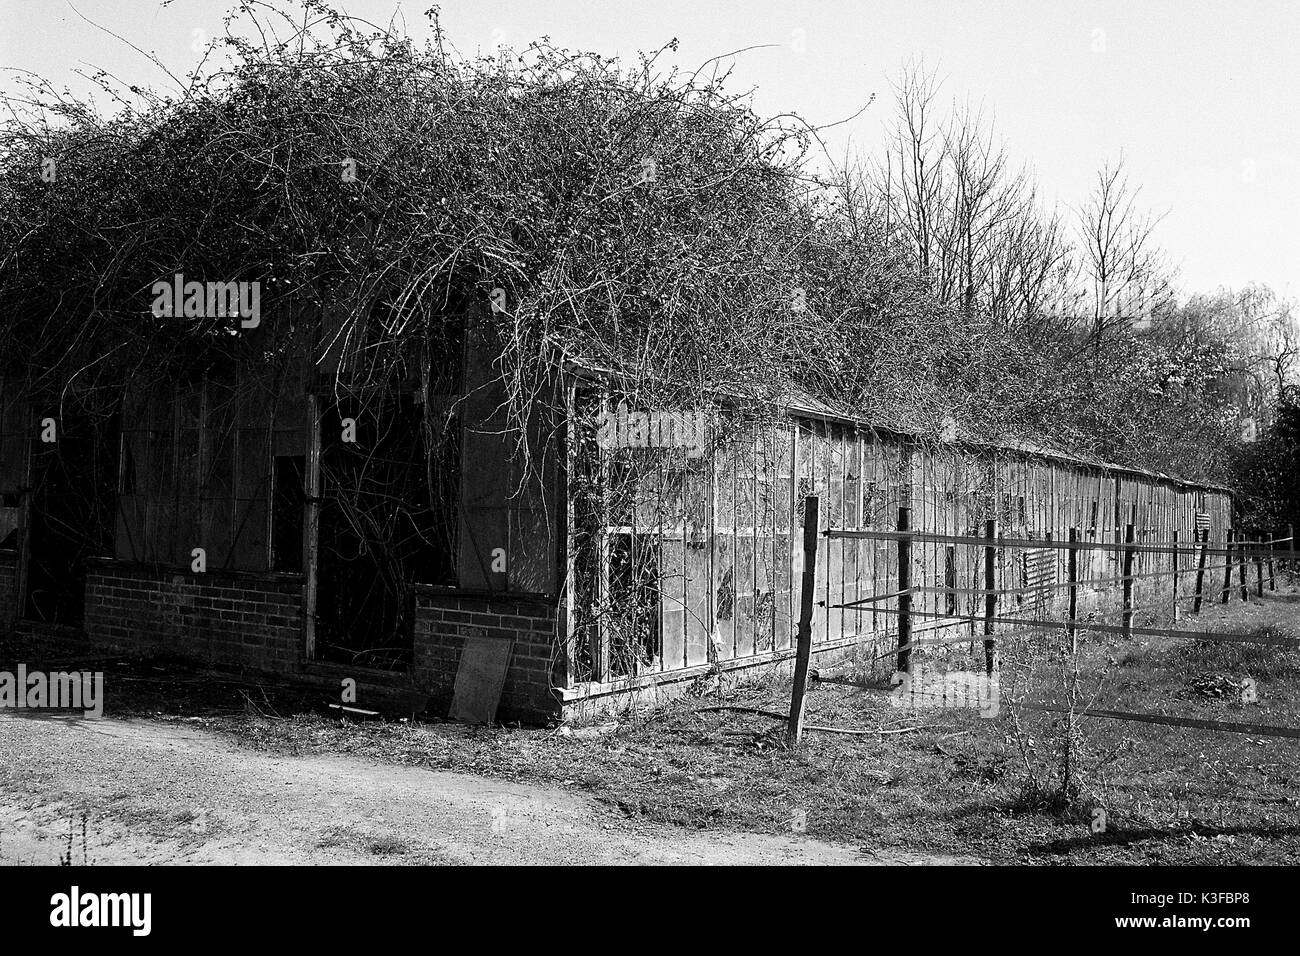 Rundown Kidby Nurseries, Little Clacton, Essex, in a state of decline awaiting development into a housing estate. Stock Photo